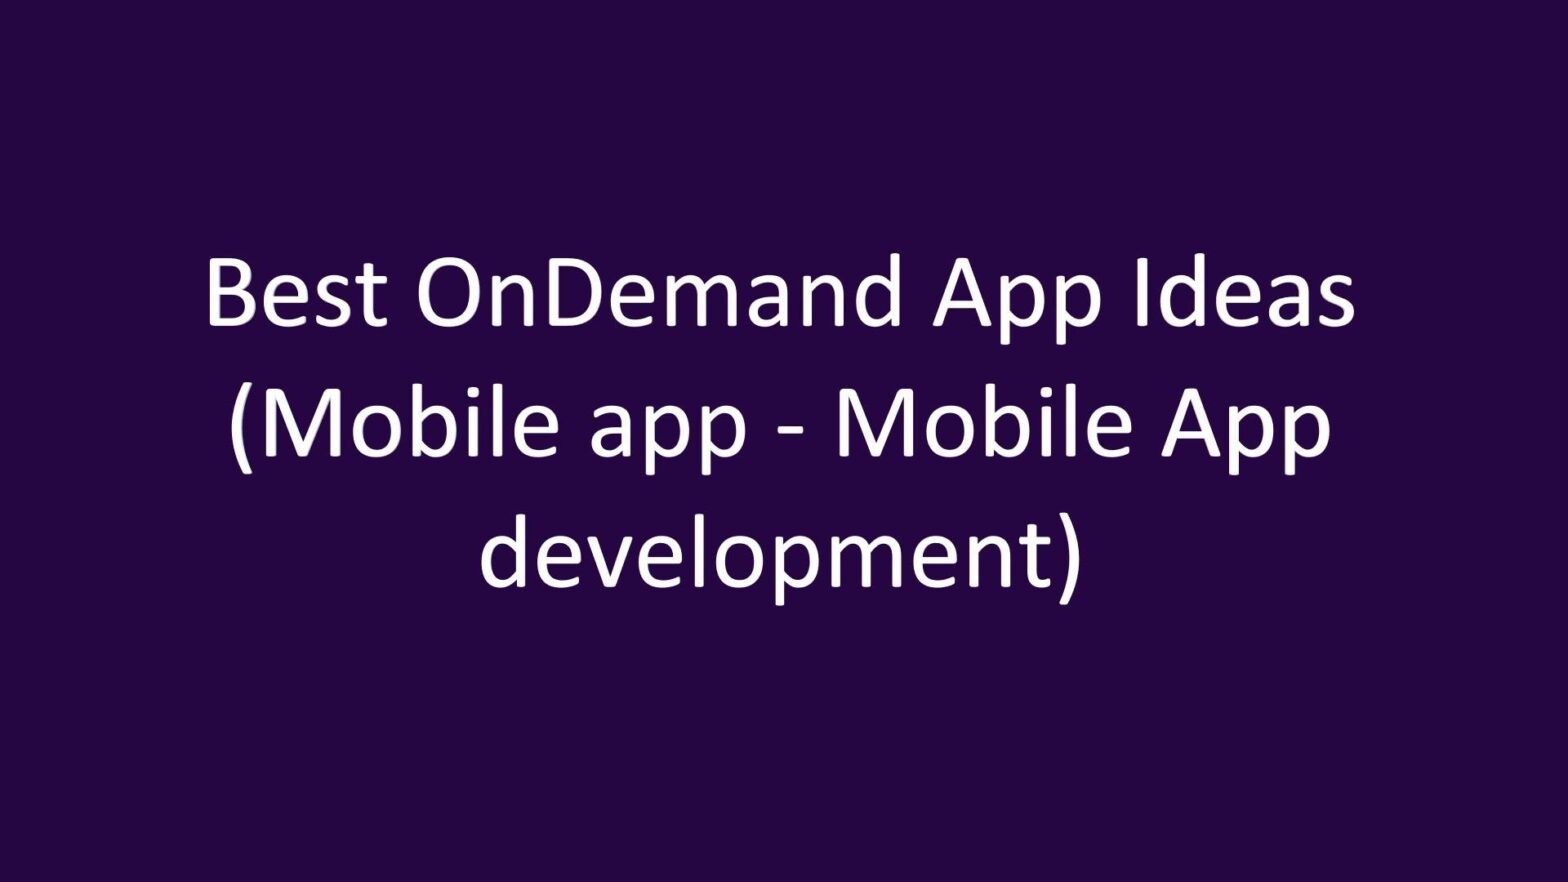 Best OnDemand App Ideas (Mobile app - Mobile App development)